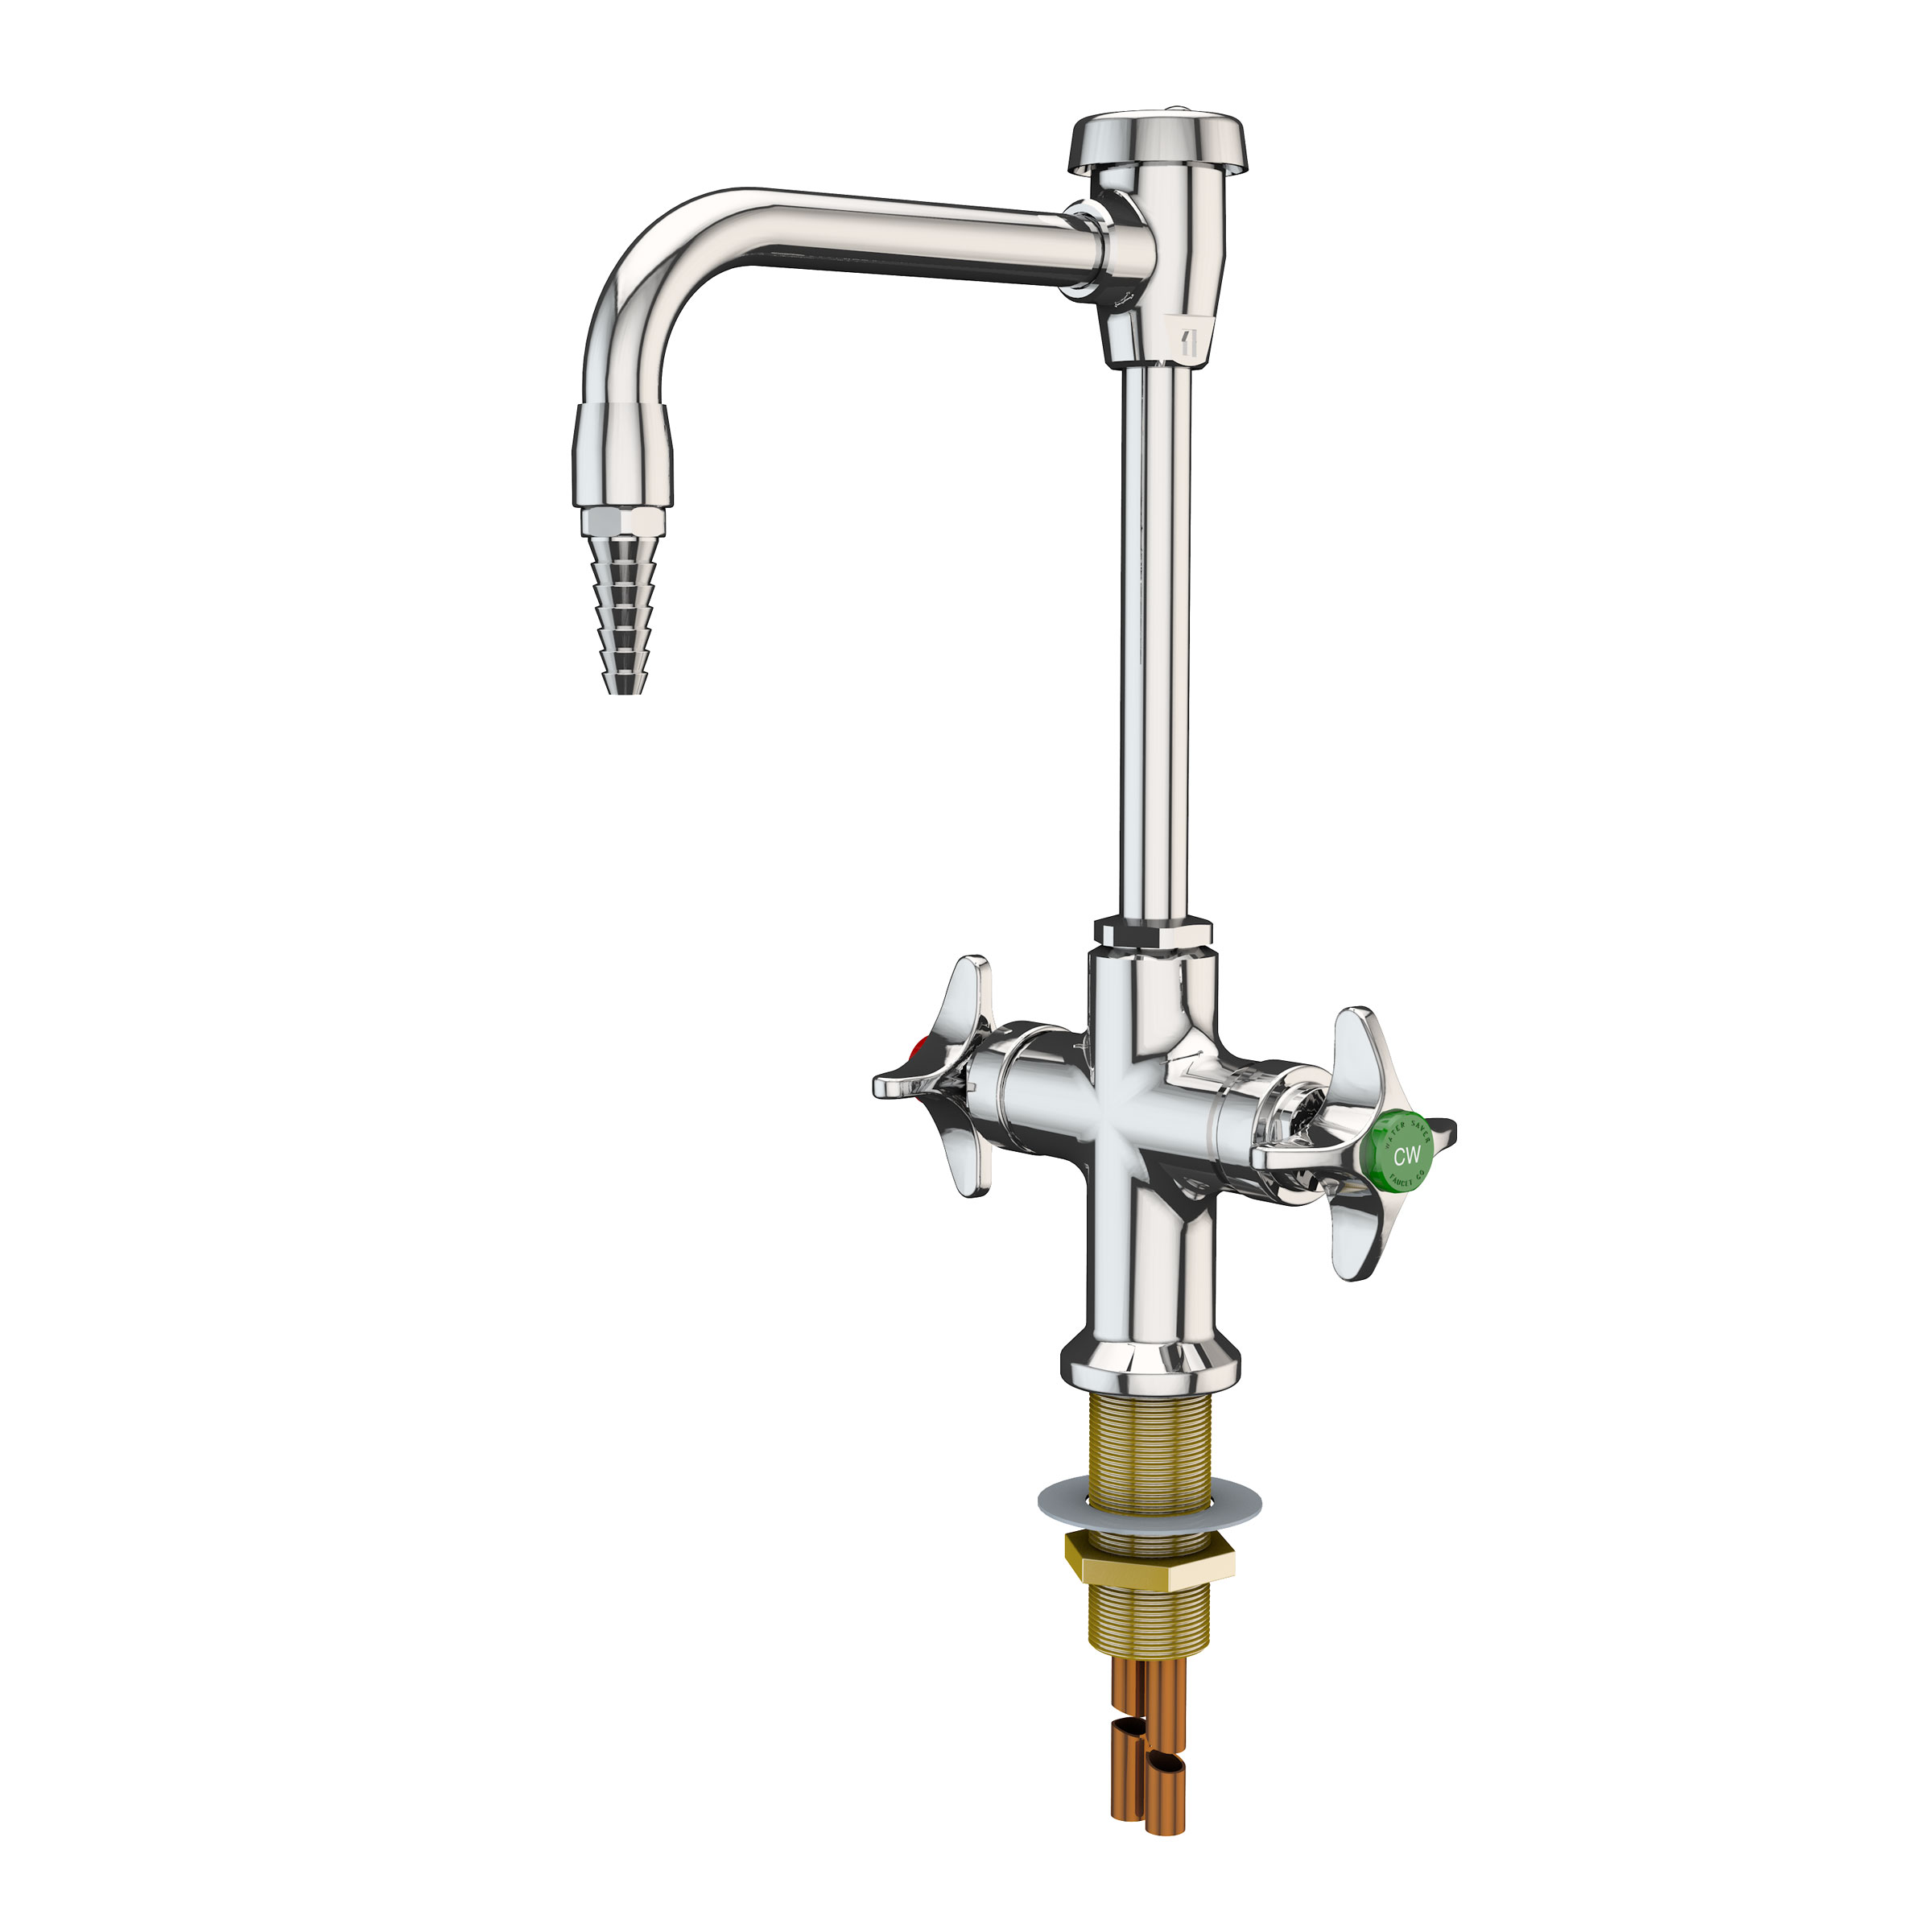 L412vb Watersaver Faucet Co